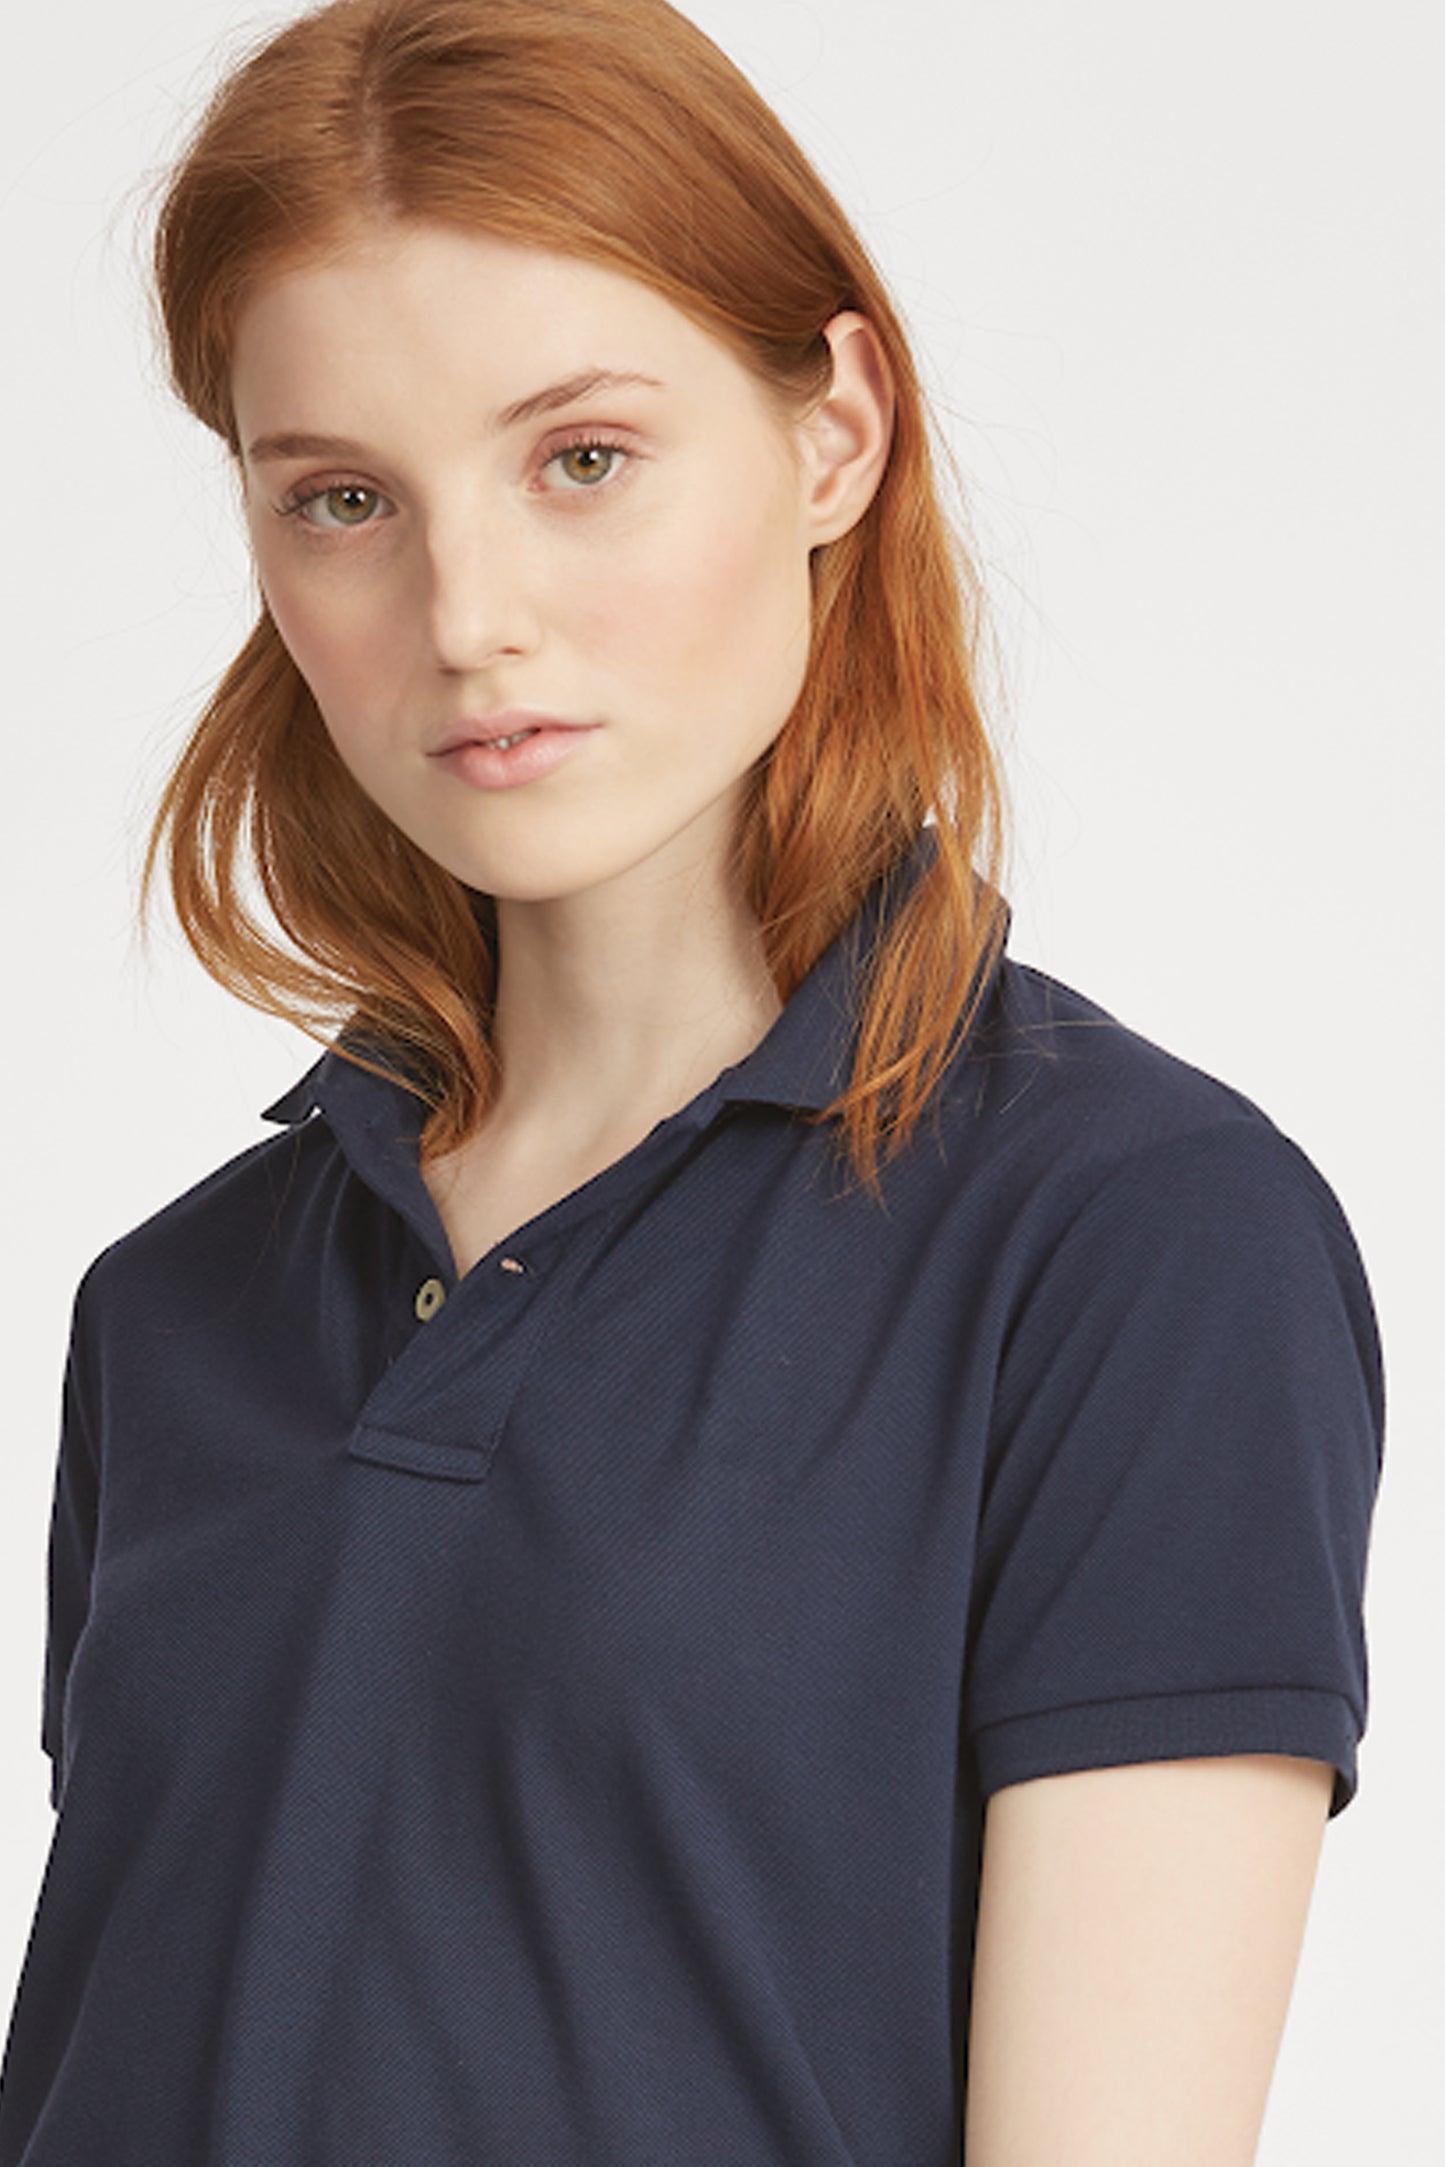 Women's Navy Blue Polo Shirt